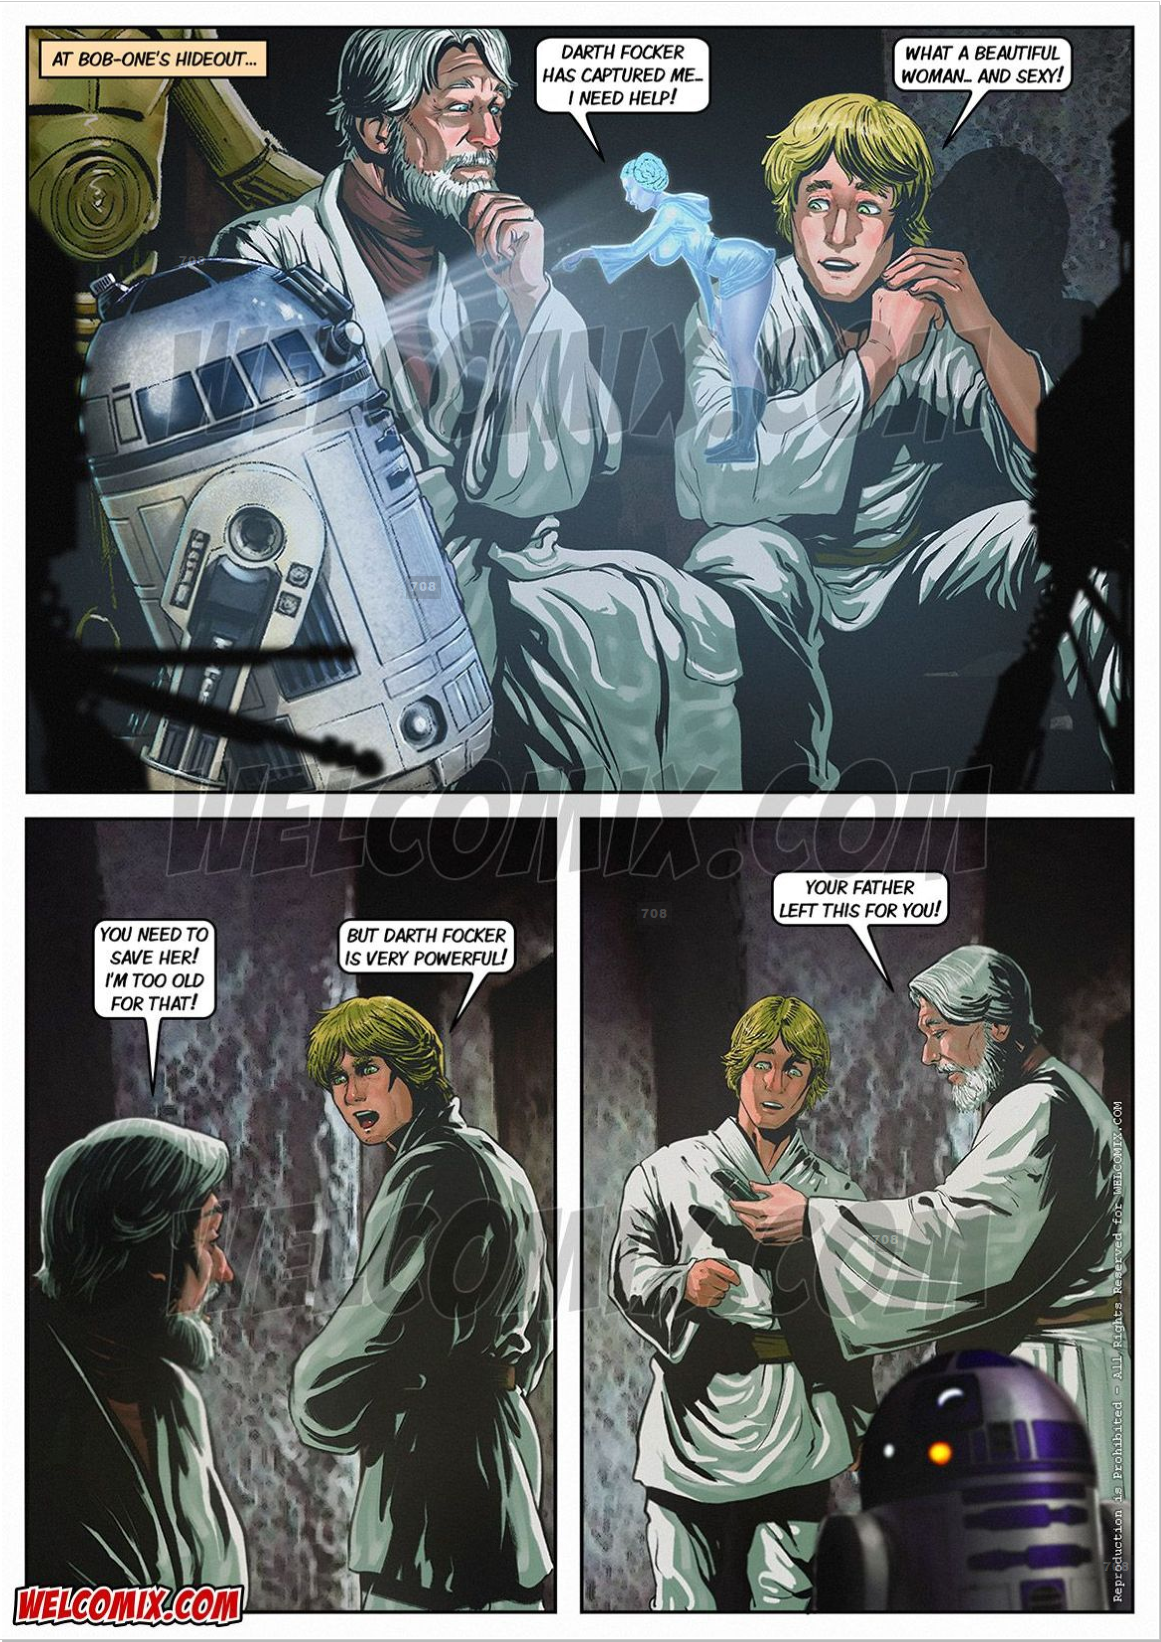 BlockBuster-Comics-03-Star-Wars-English-page05--Gotofap.tk--40009520.png